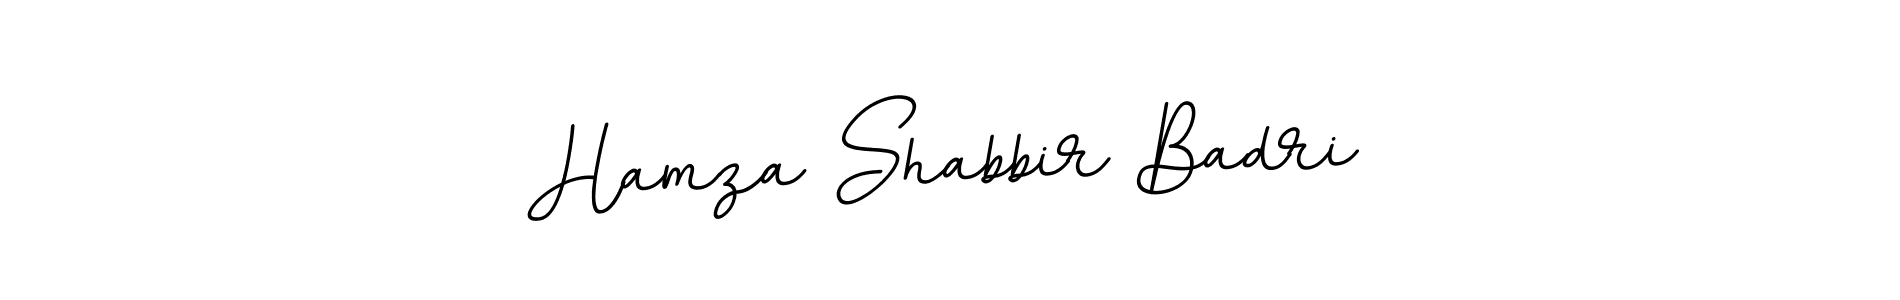 How to Draw Hamza Shabbir Badri signature style? BallpointsItalic-DORy9 is a latest design signature styles for name Hamza Shabbir Badri. Hamza Shabbir Badri signature style 11 images and pictures png